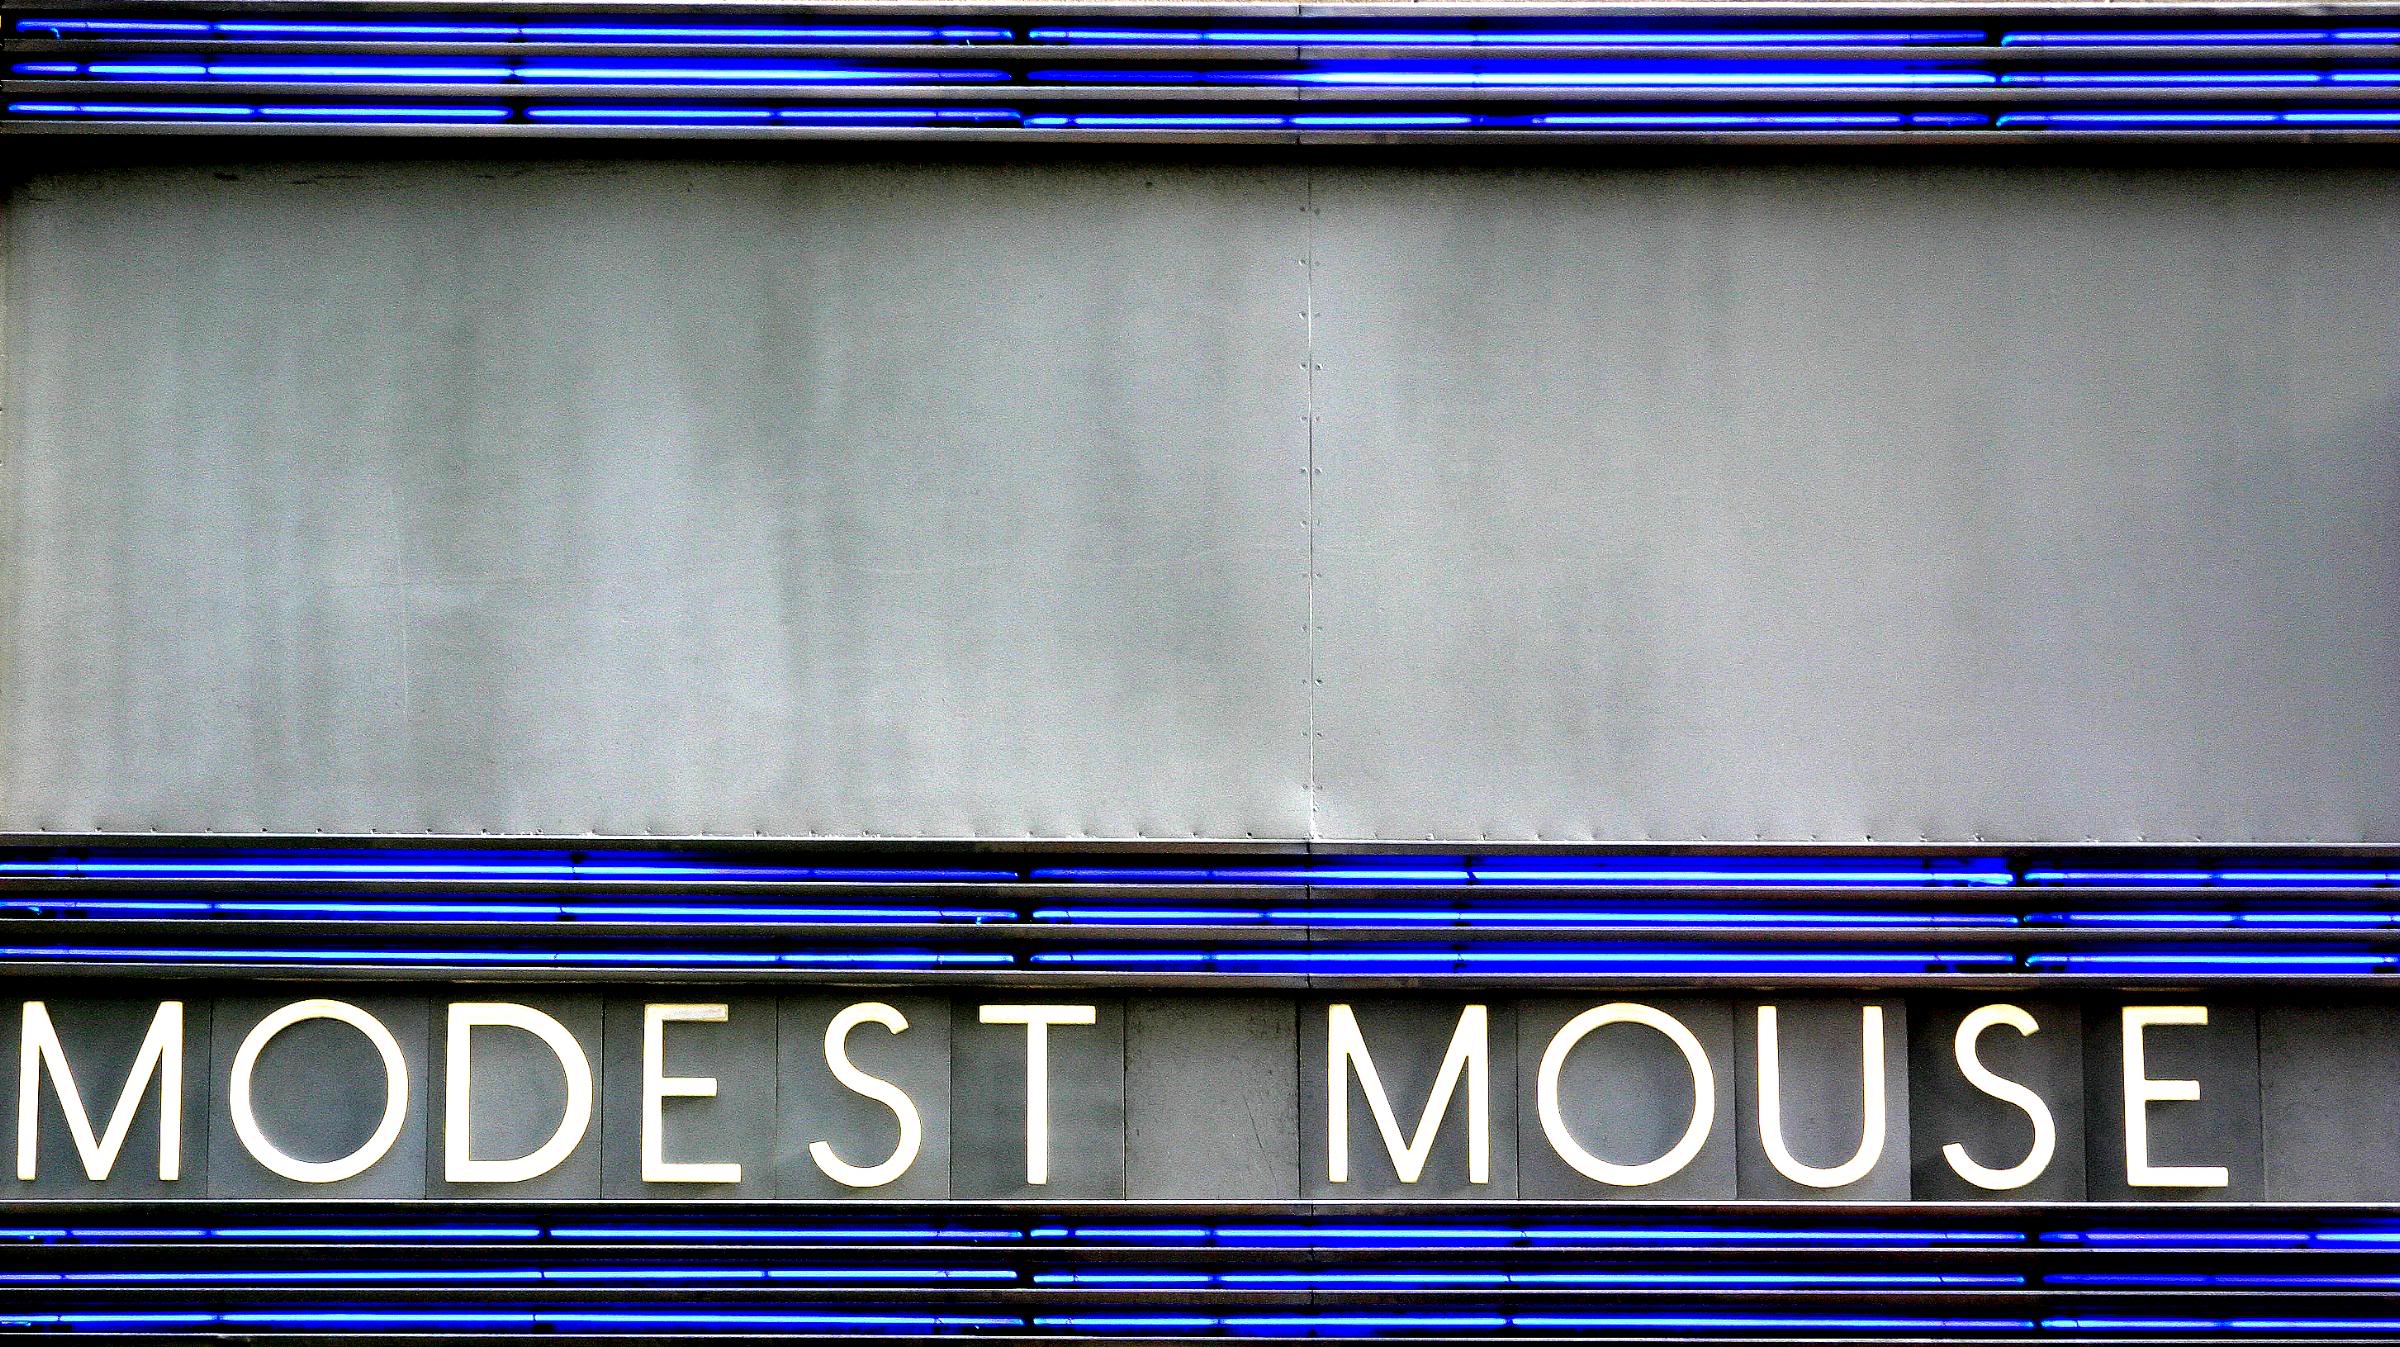 Modest Mouse - обои на рабочий стол